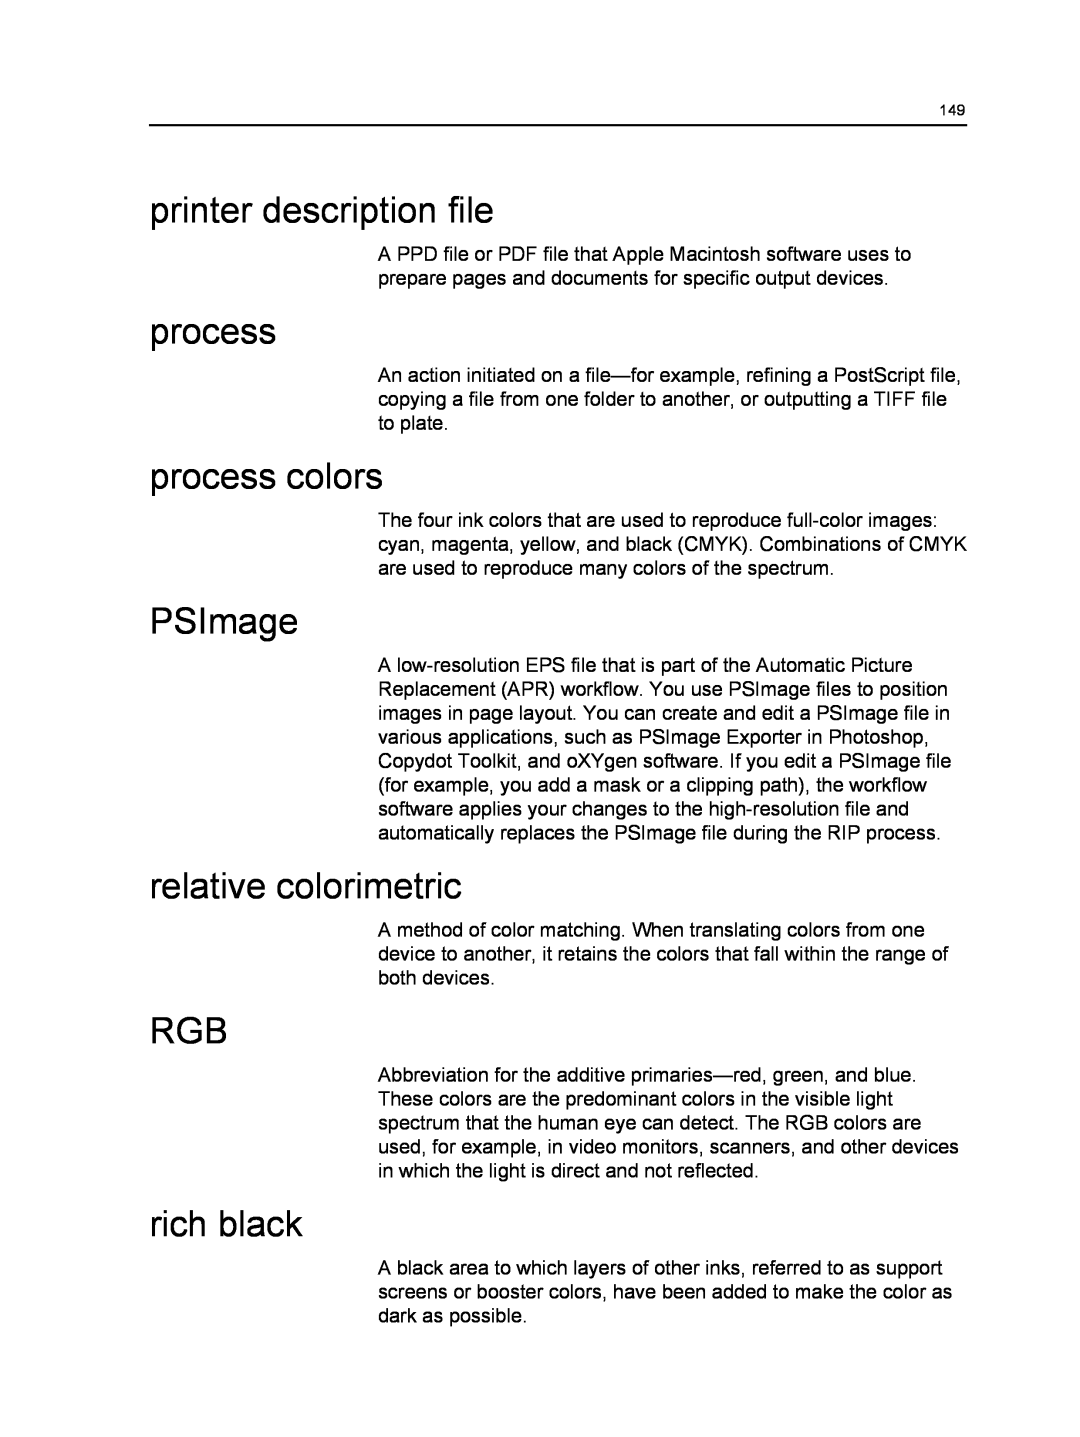 Xerox 550, 560 manual printer description file, process colors, PSImage, relative colorimetric, rich black 